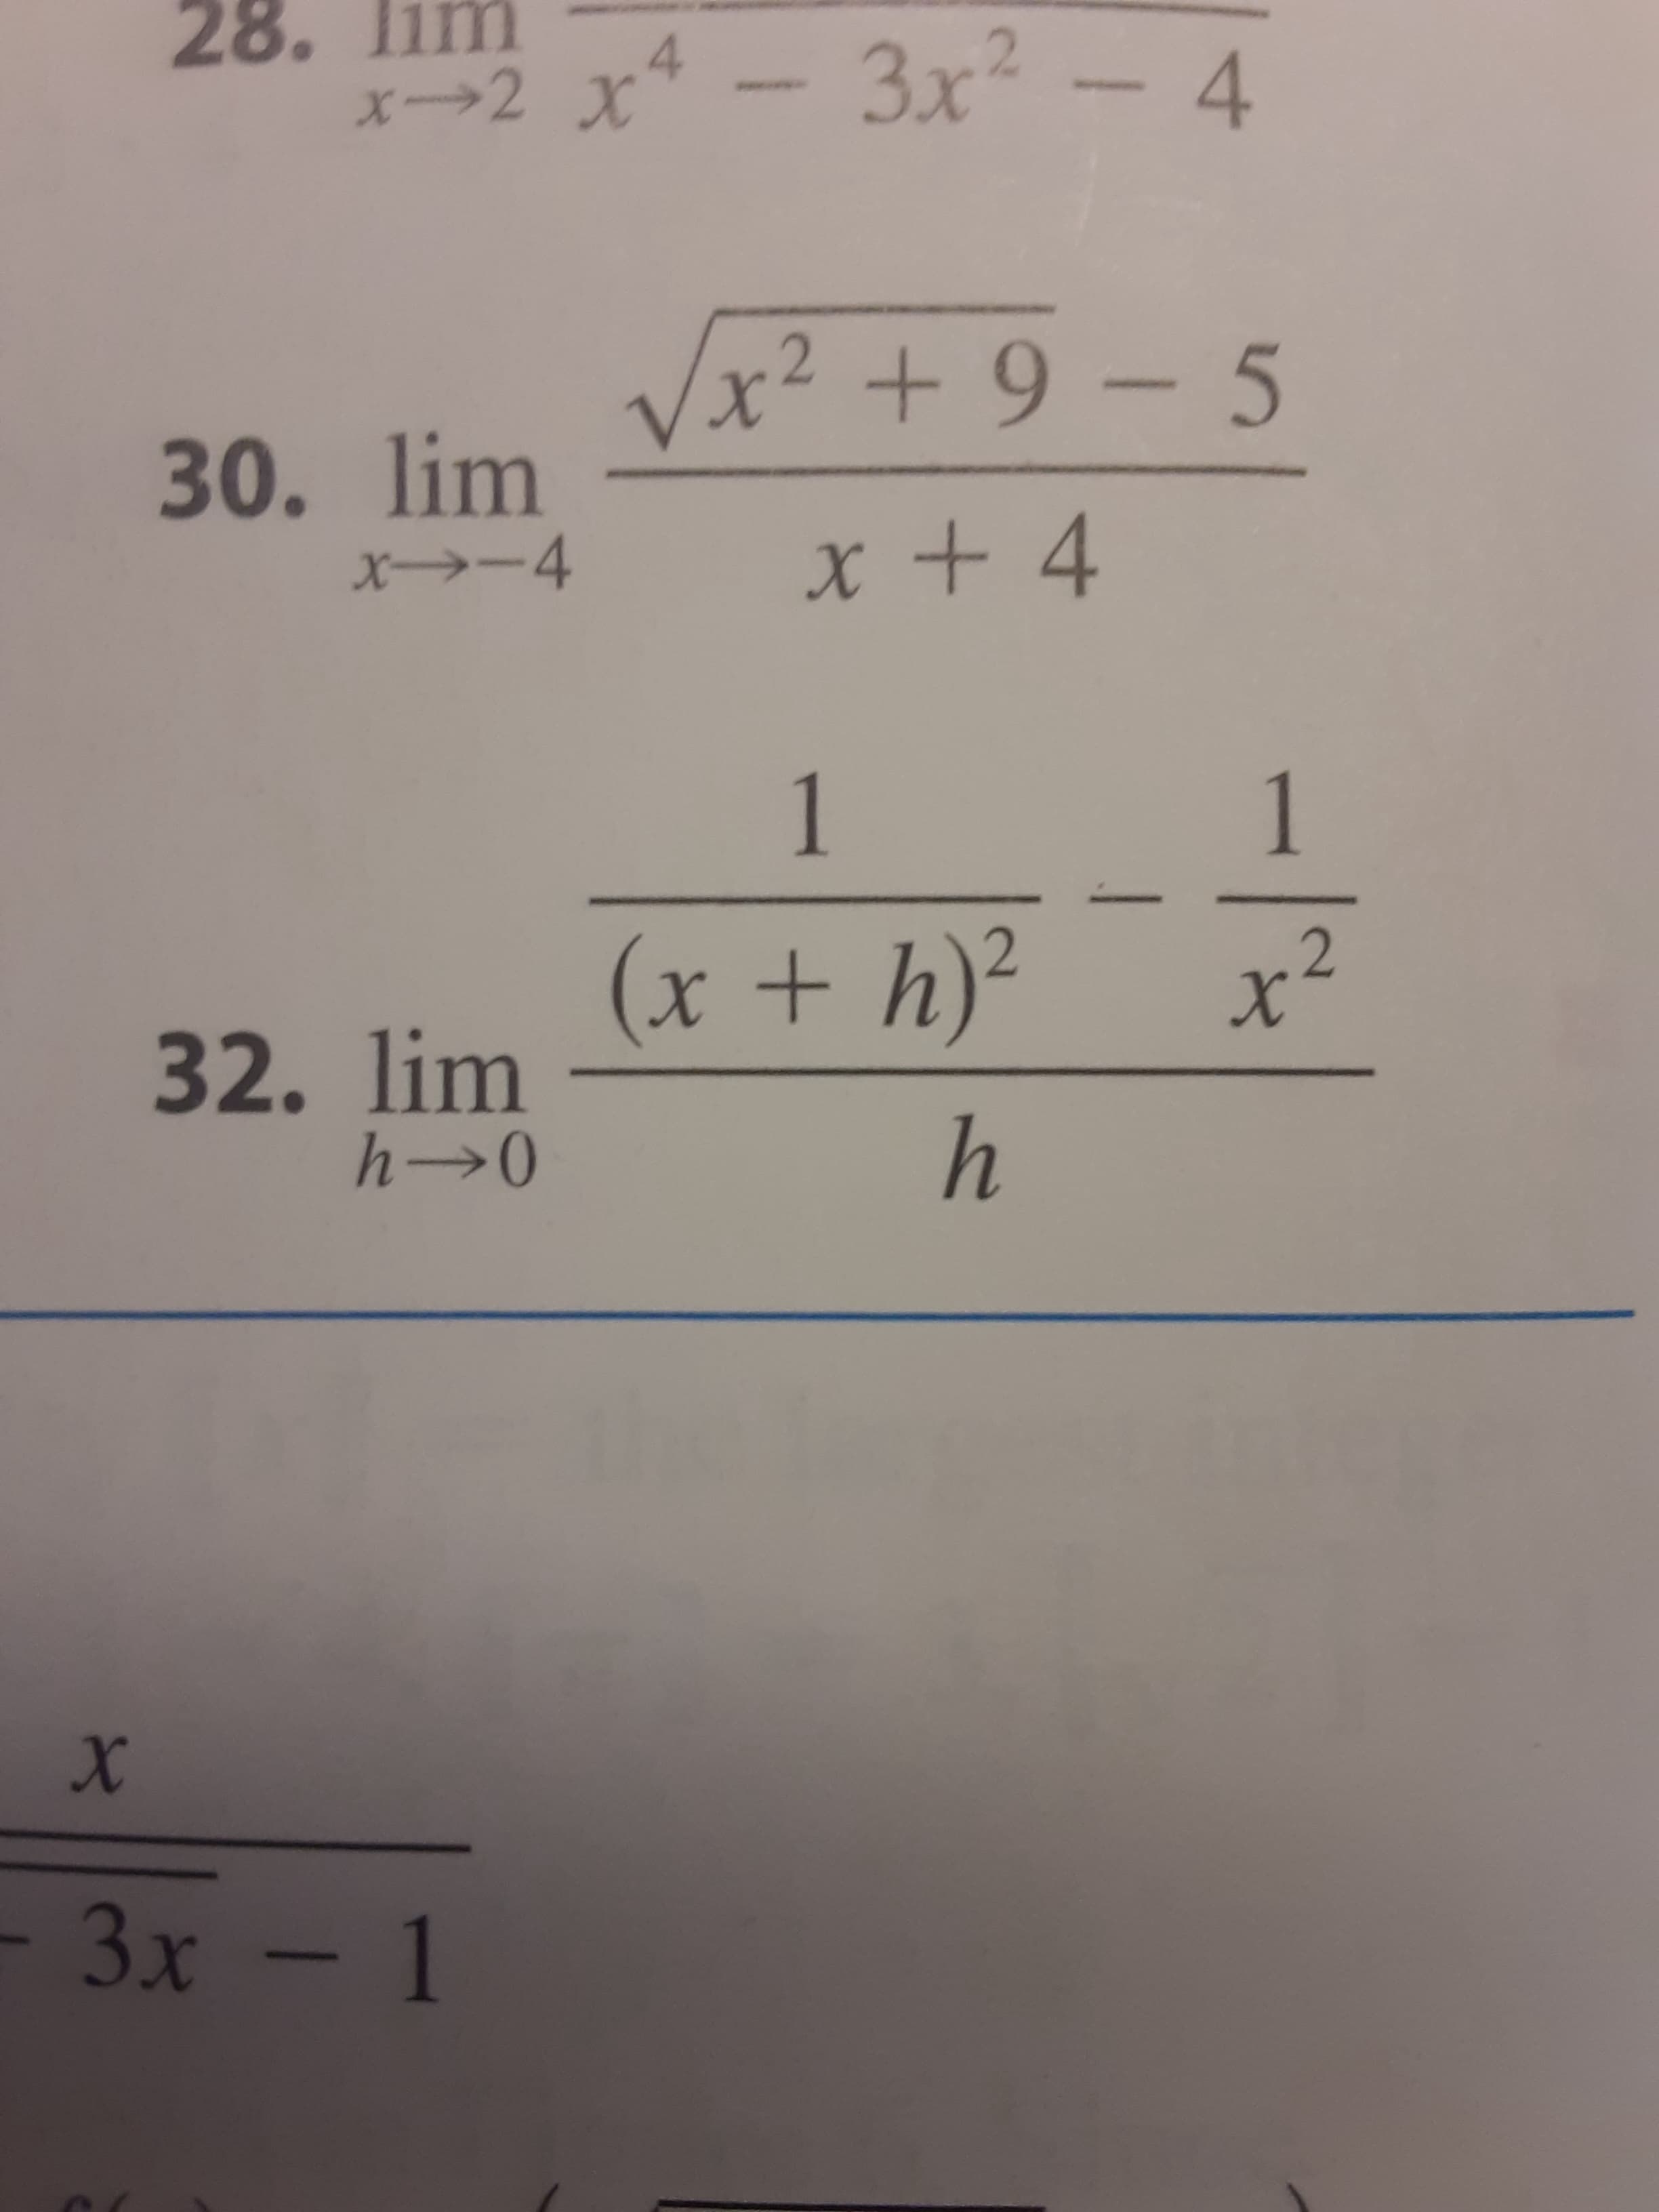 1
1
(x + h)²
32. lim
h→0
